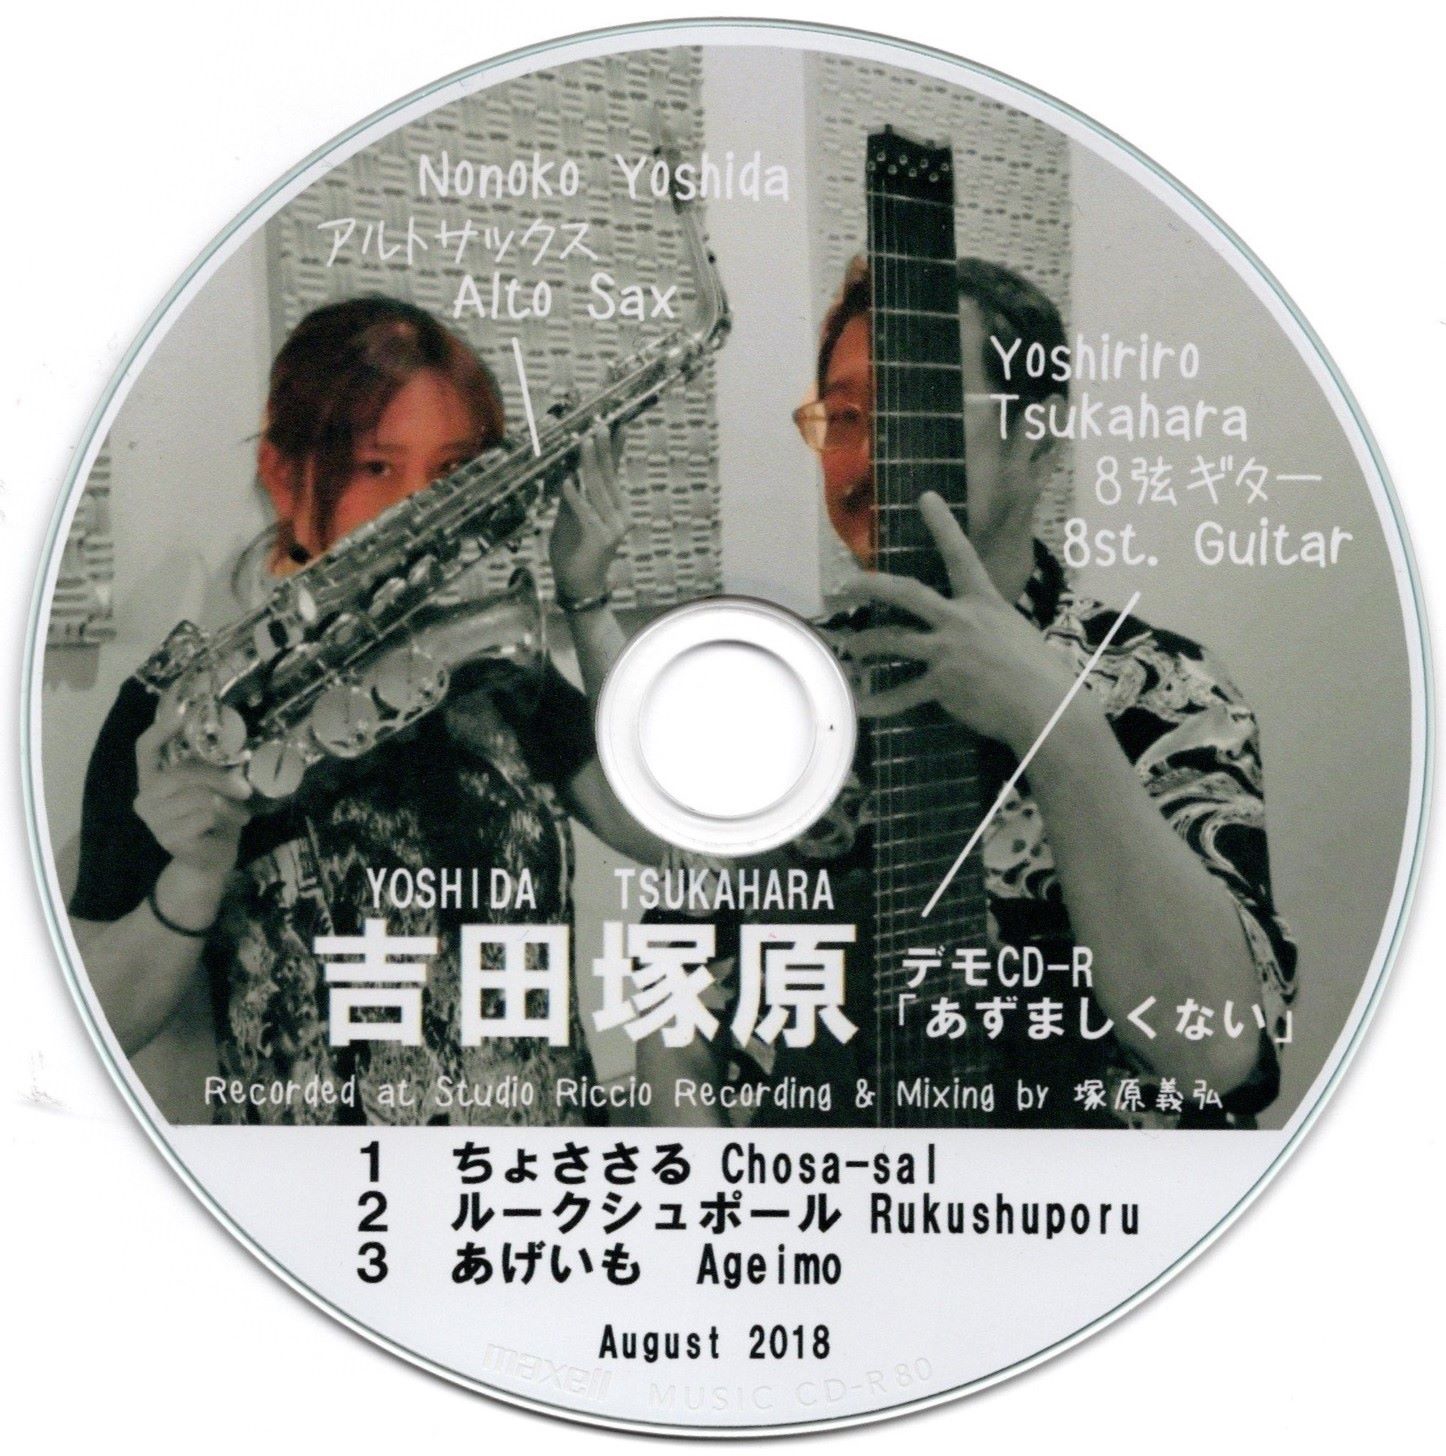 CD-Rs, DVD-Rs | 【公式 Official】野乃屋レコーズ Nonoya Records